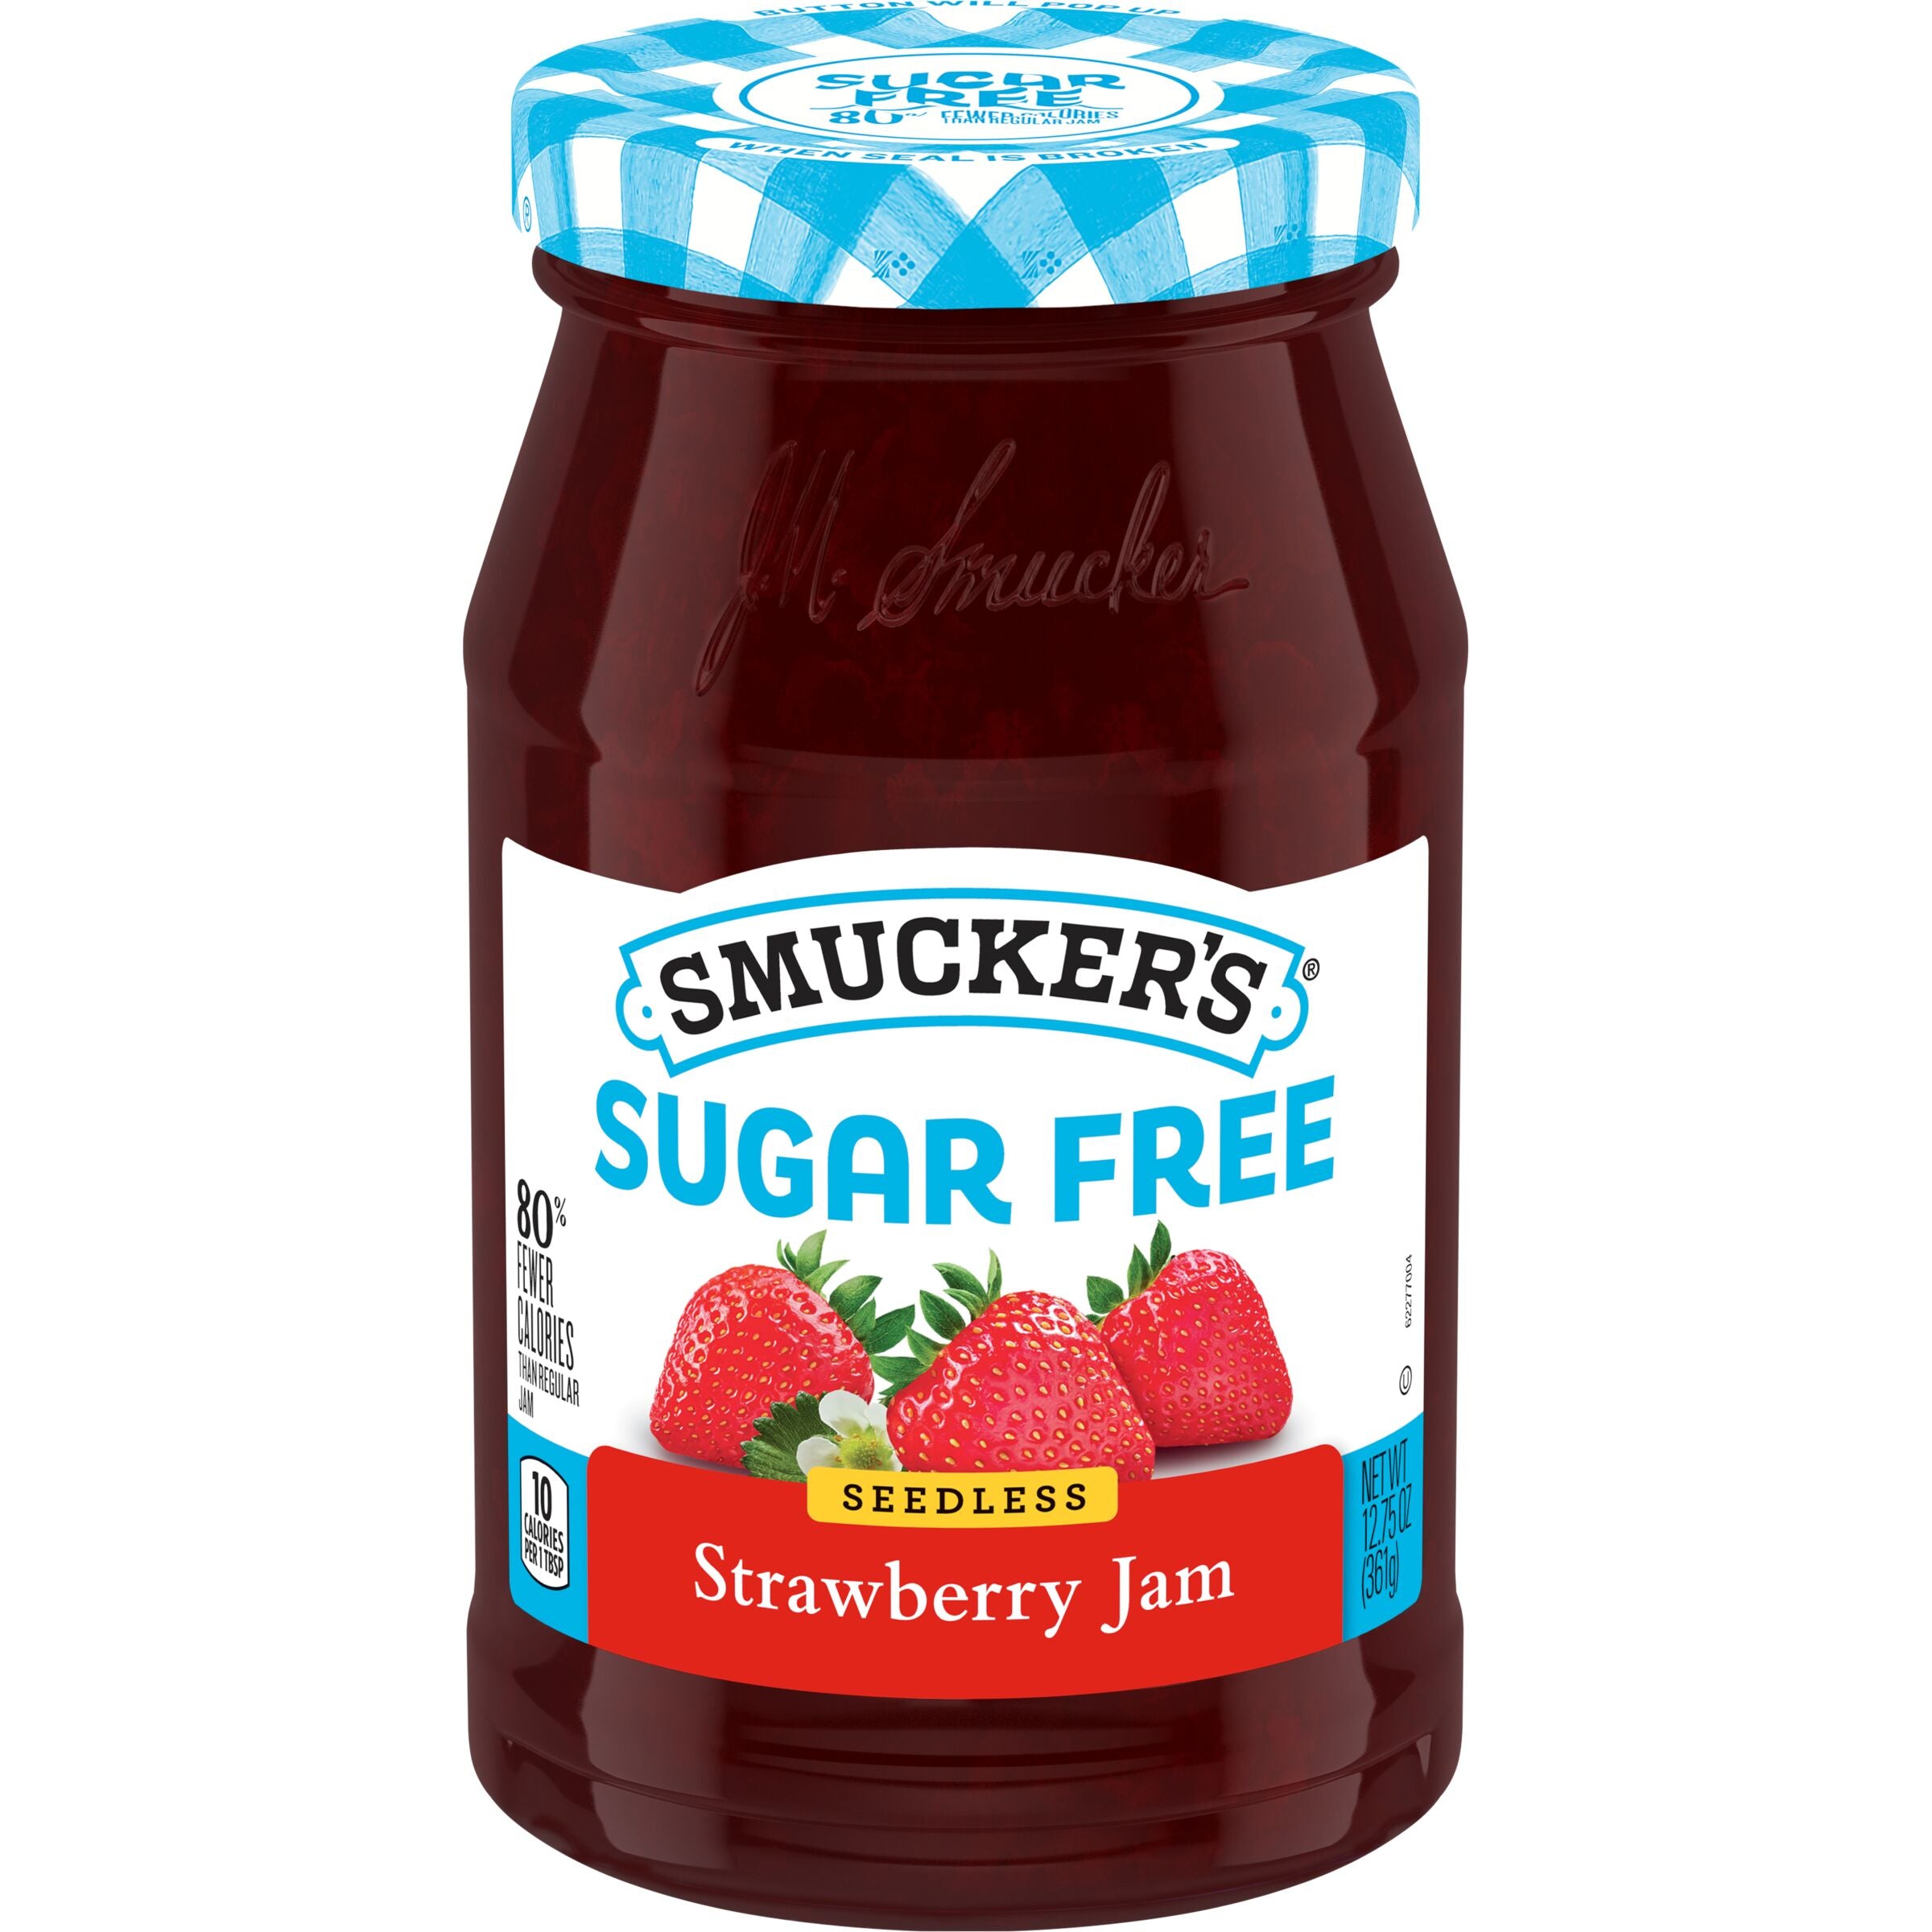 Smucker's Sugar Free Seedless Strawberry Jam with Splenda Brand Sweetener, 12.75 oz